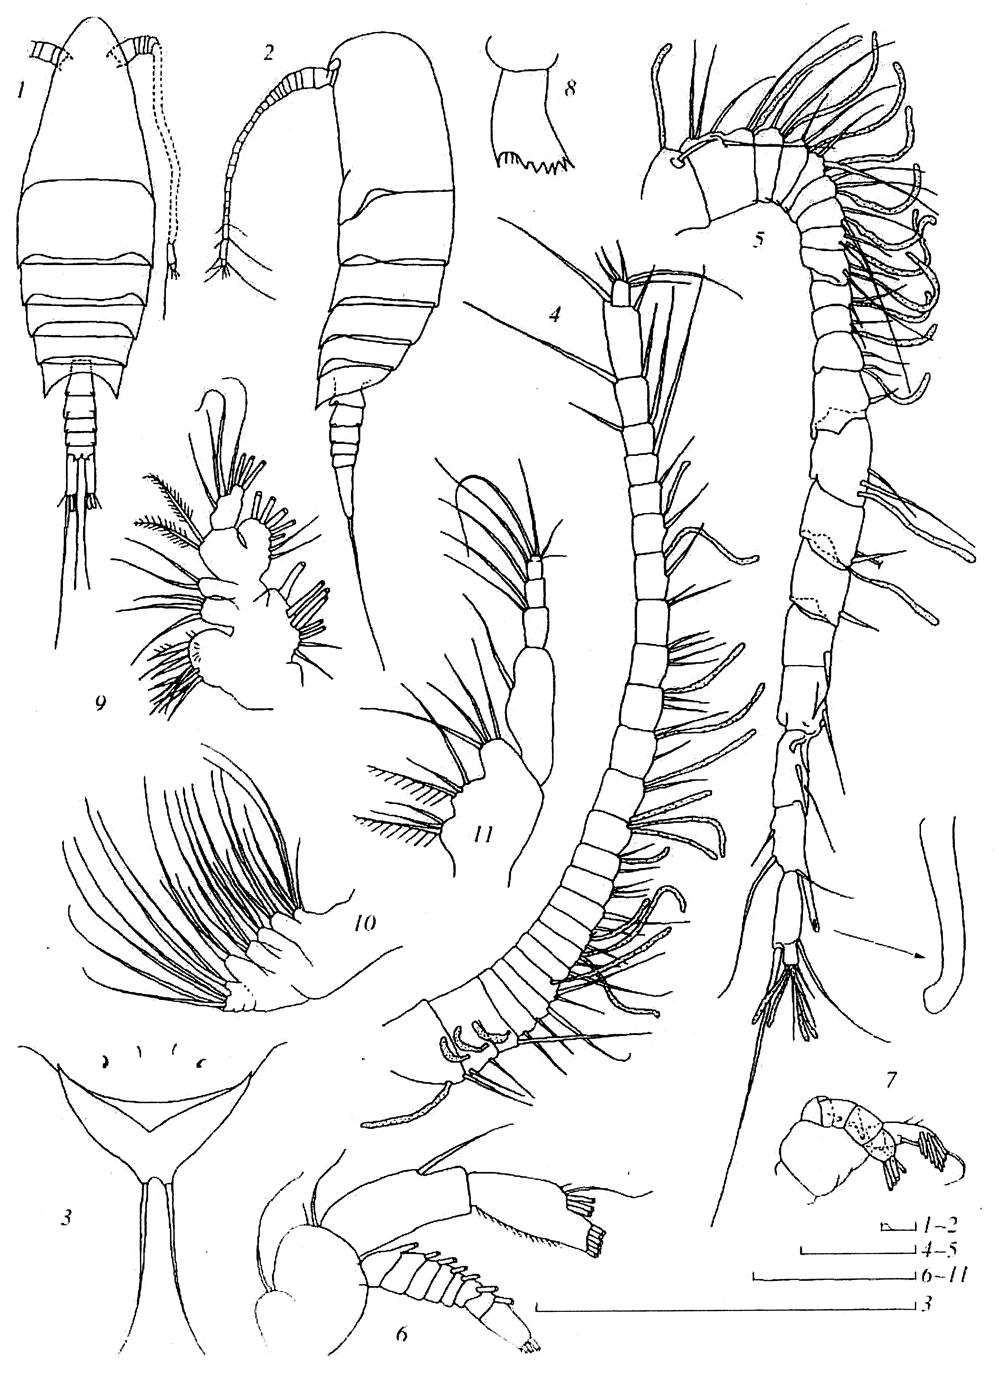 Species Miheptneria abyssalis - Plate 1 of morphological figures